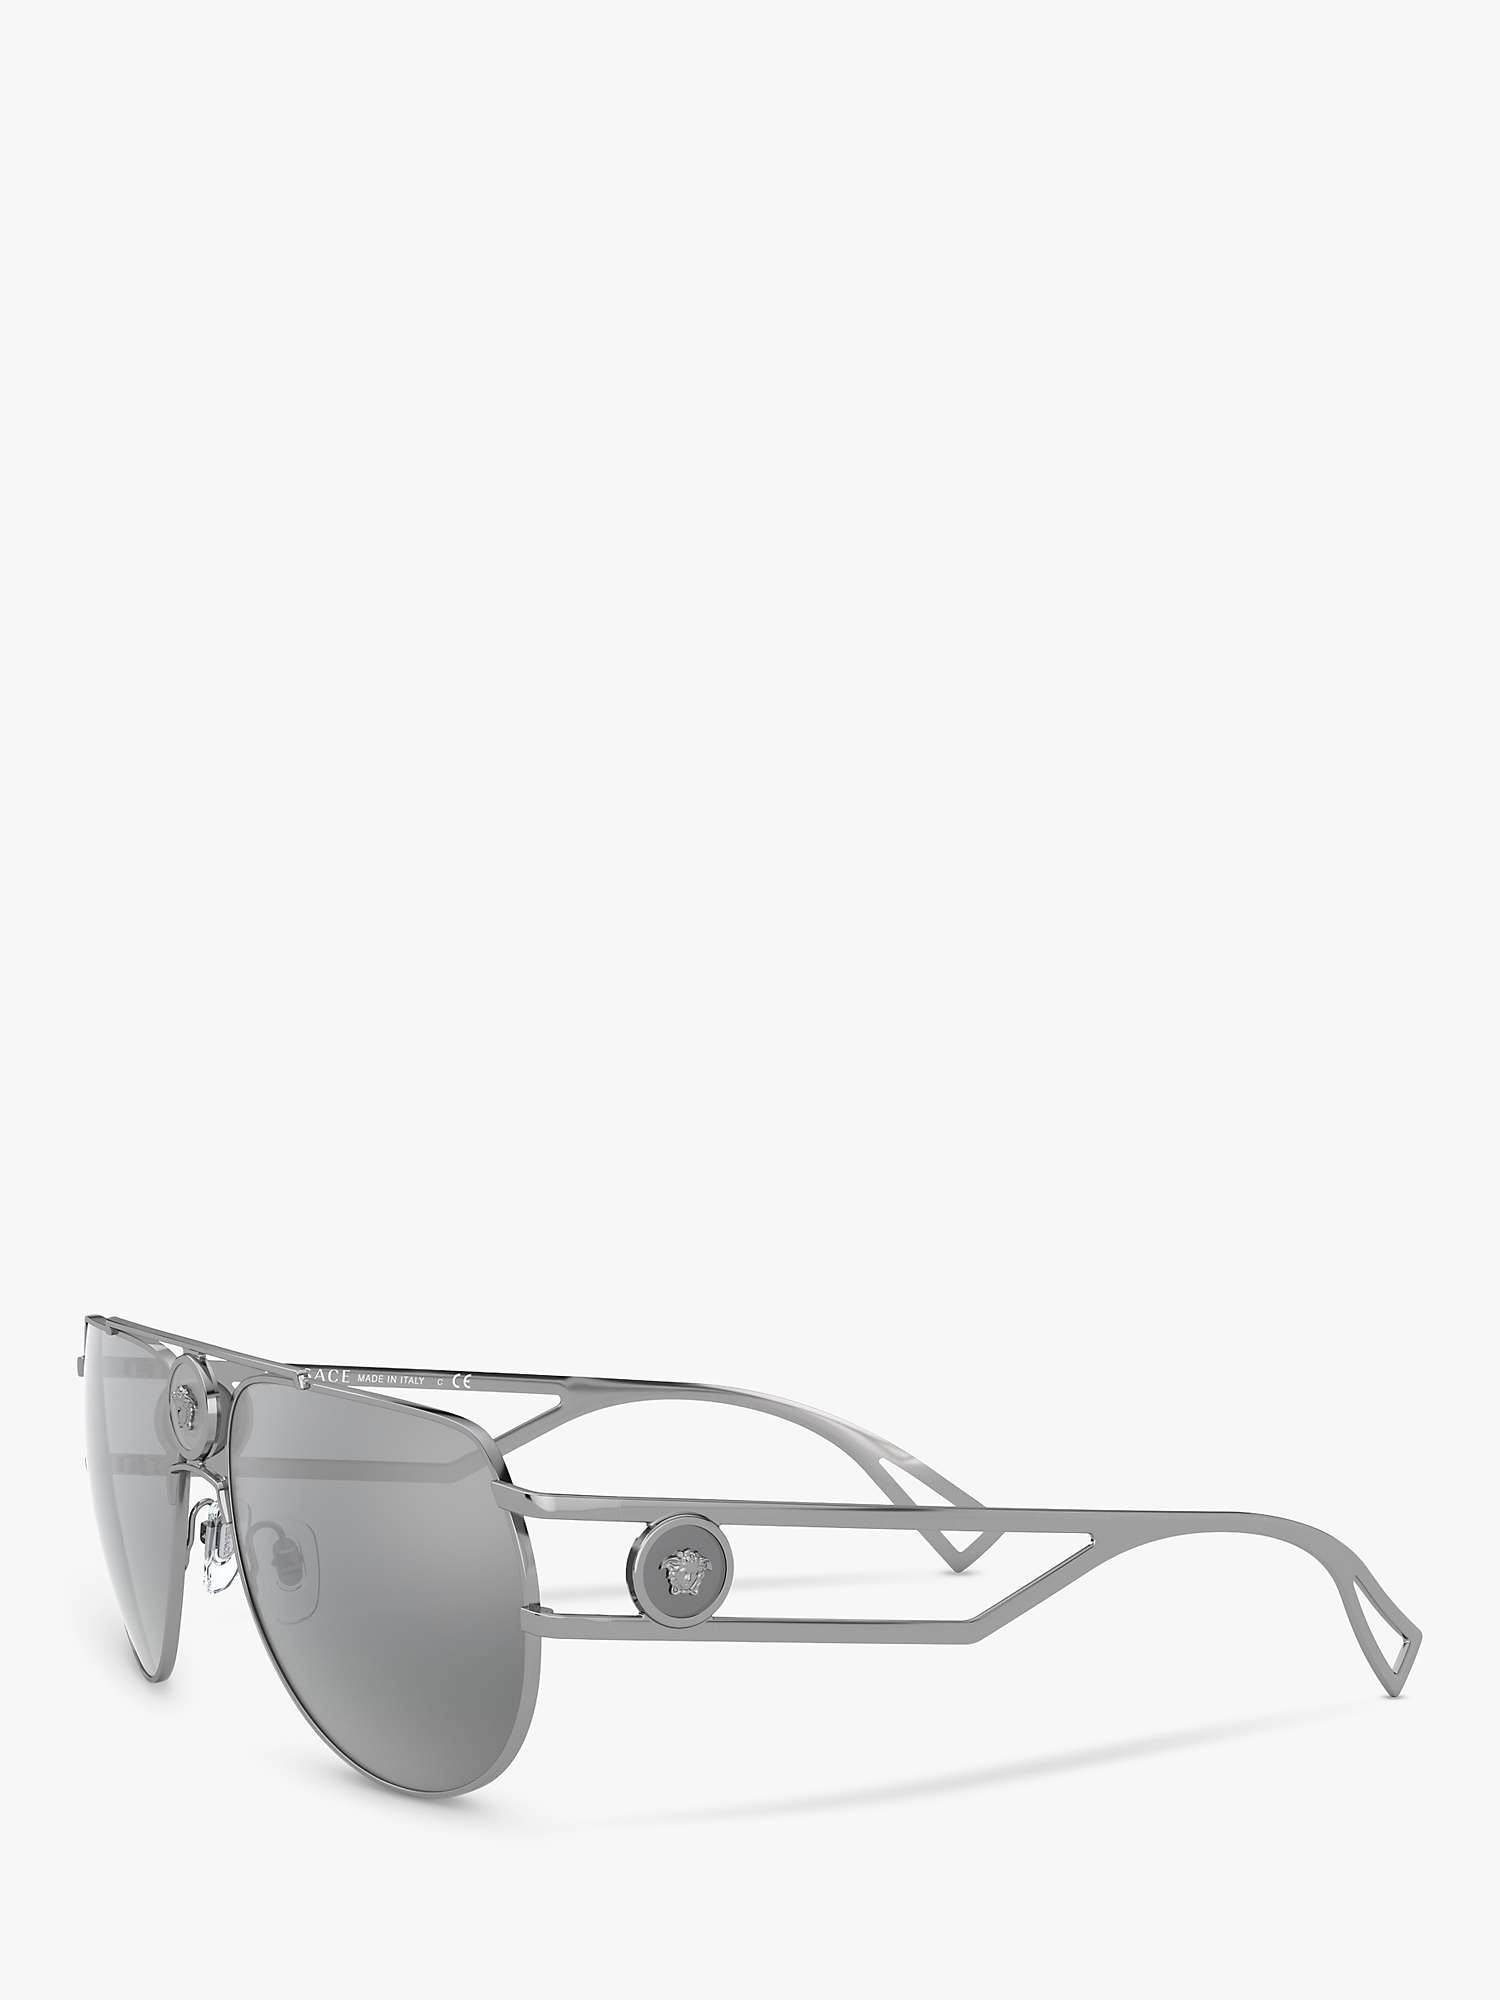 Buy Versace VE2225 Men's Aviator Sunglasses, Gunmetal/Grey Online at johnlewis.com